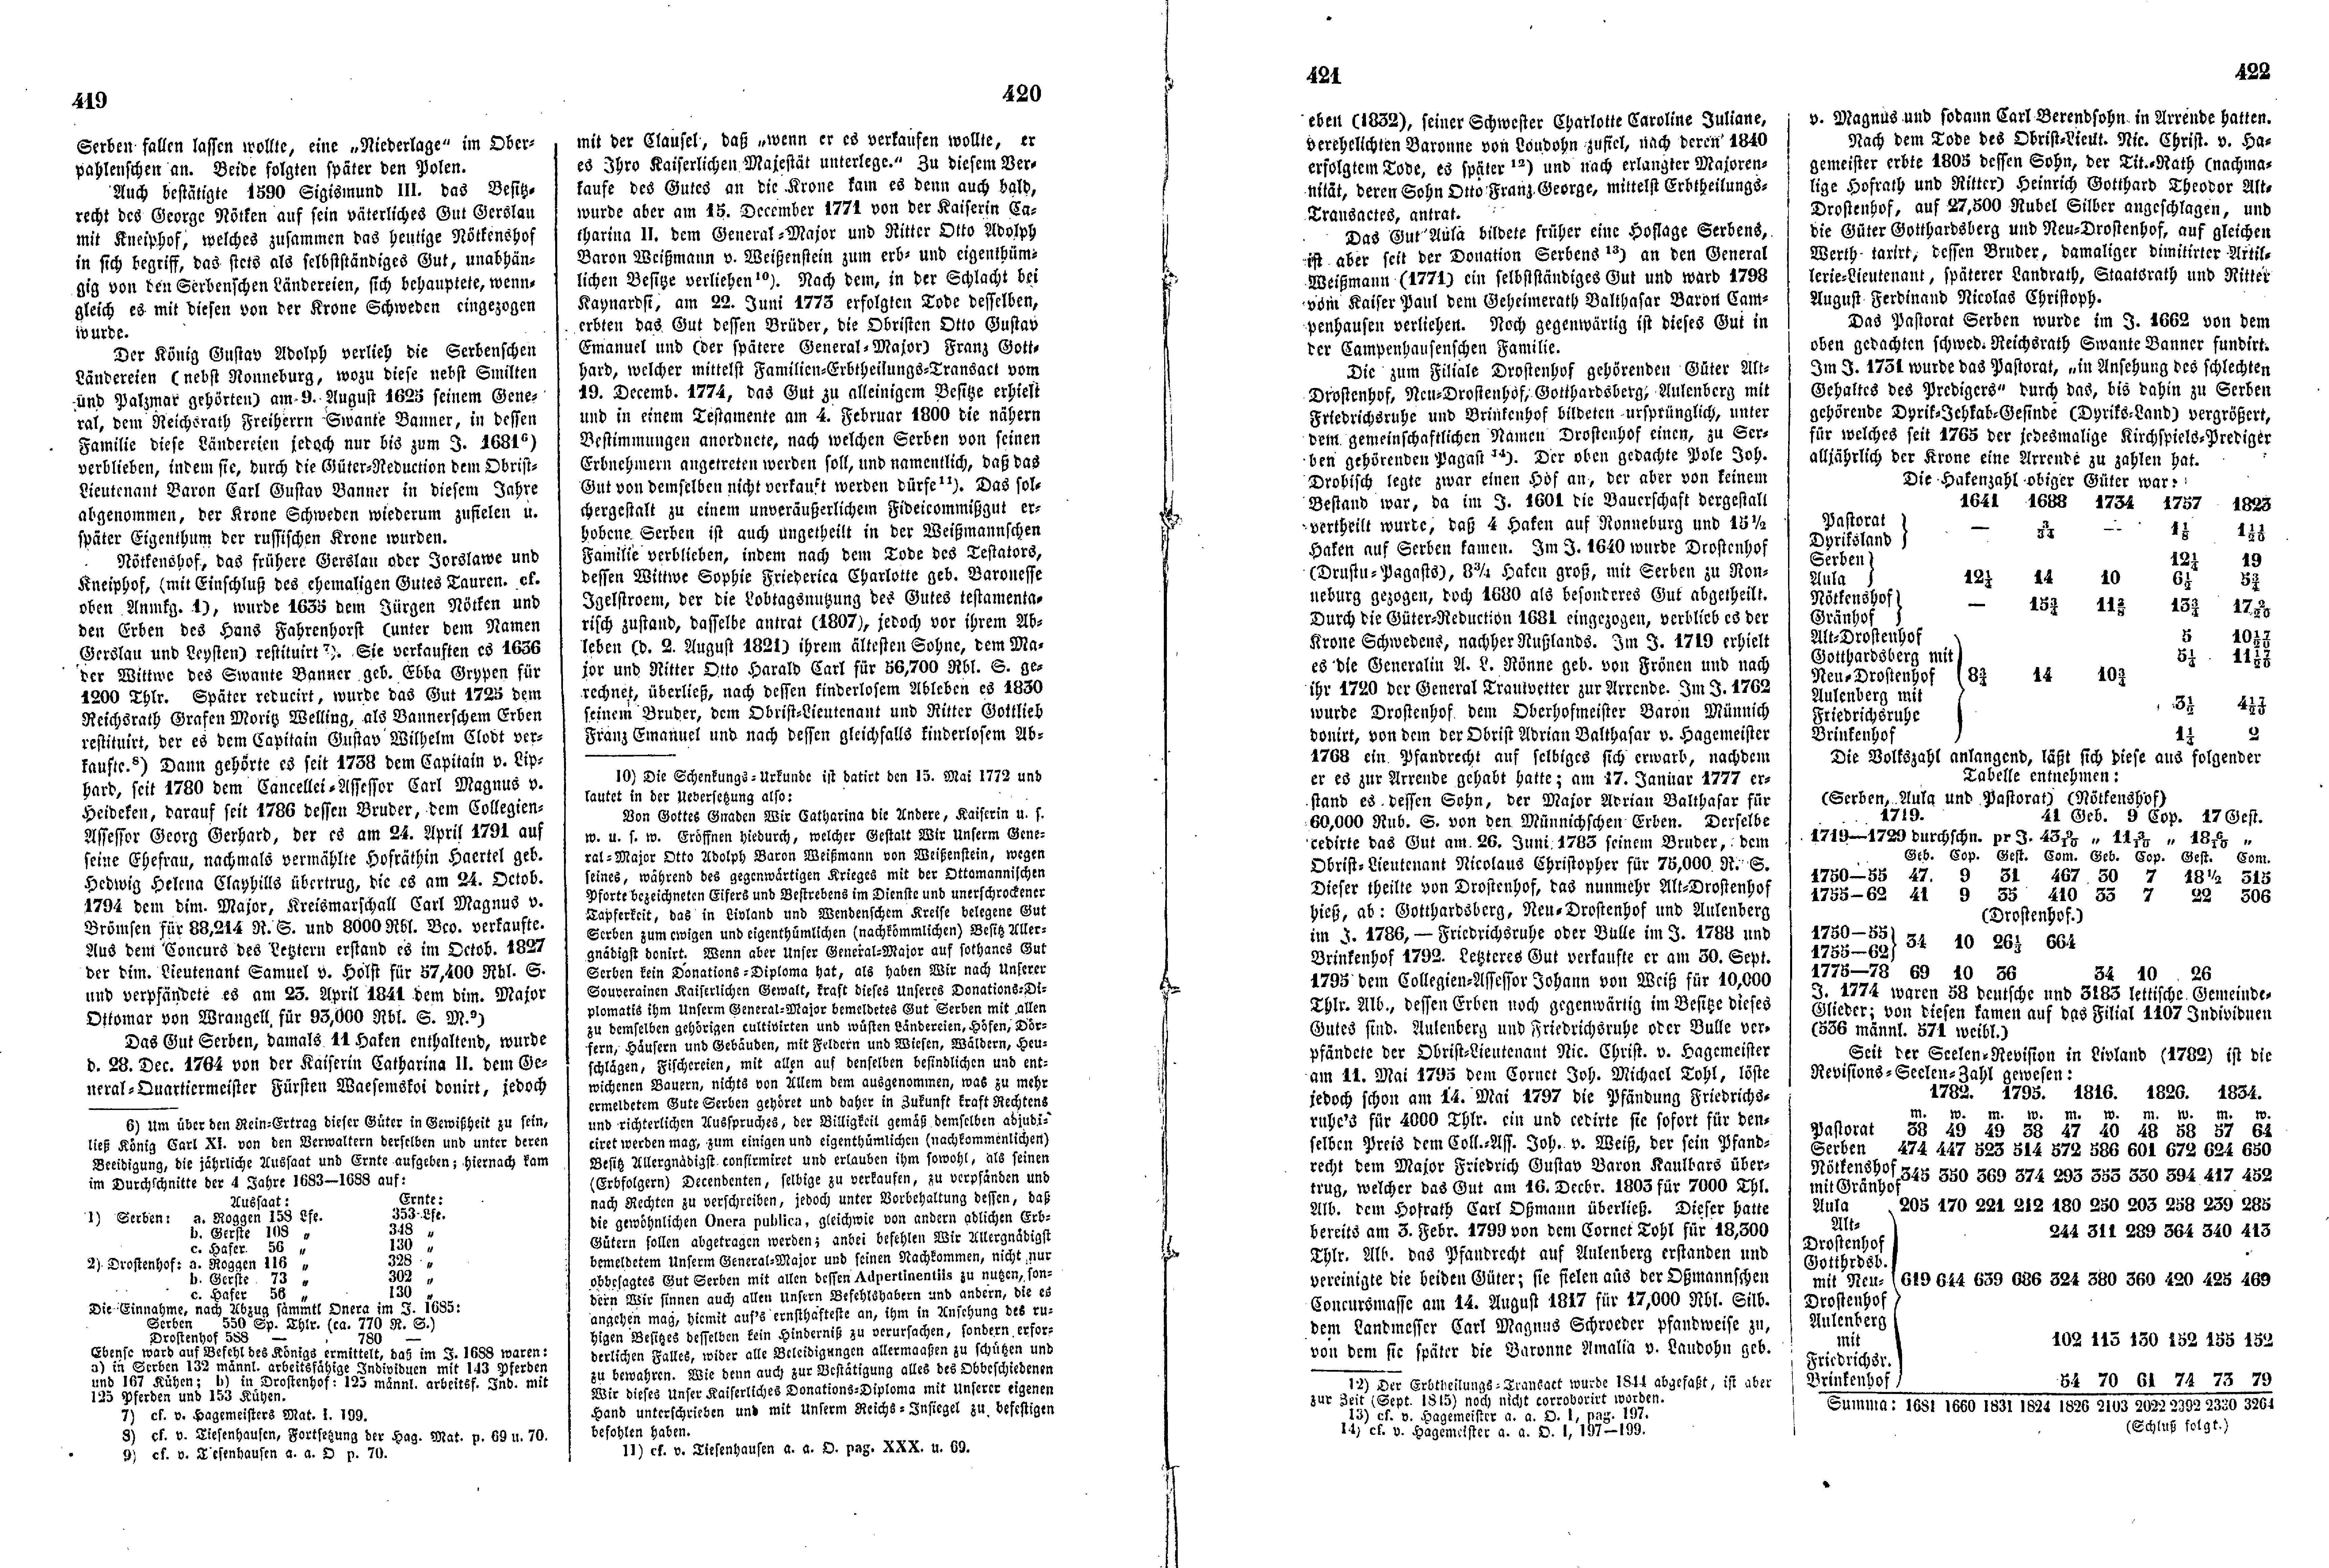 Das Inland [11] (1846) | 110. (419-422) Main body of text